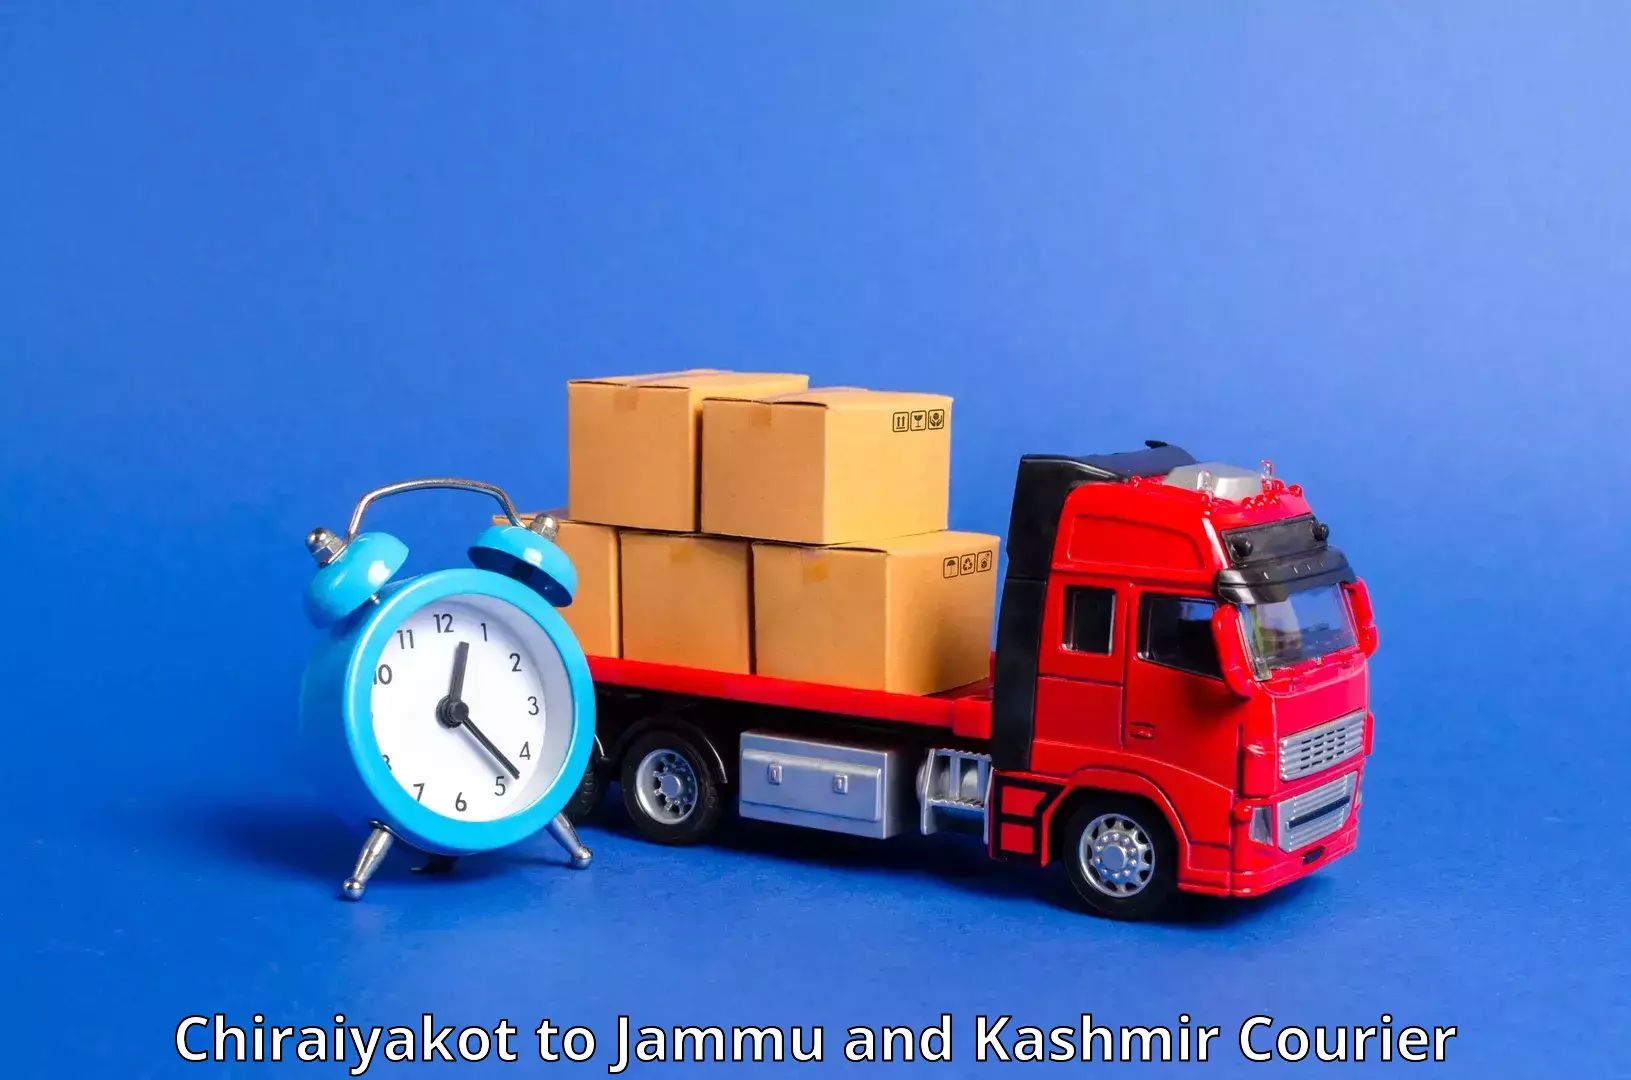 High-speed parcel service Chiraiyakot to Leh